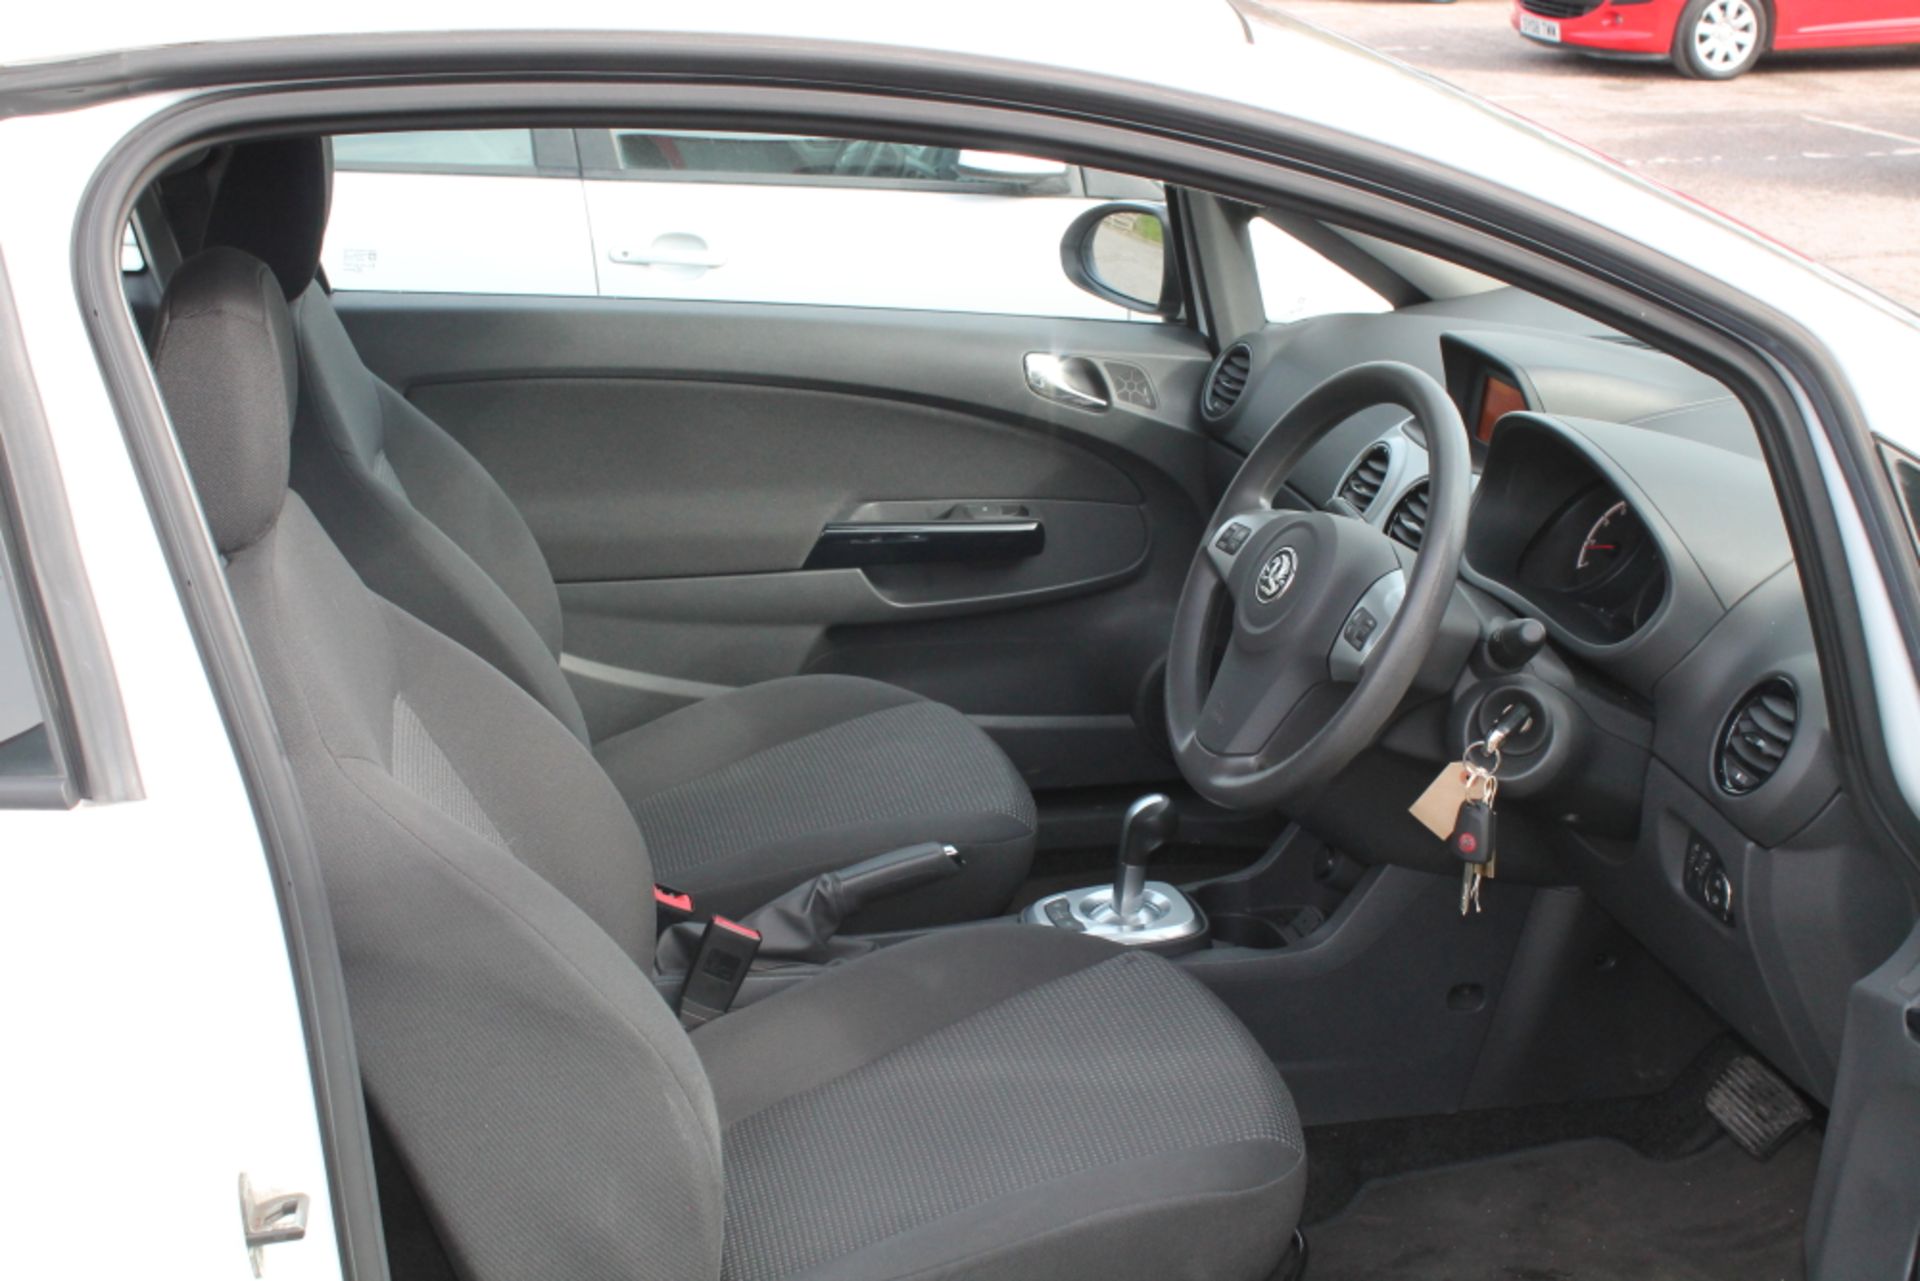 Vauxhall Corsa Excite Ac S-a - 1229cc 3 Door - Image 6 of 6